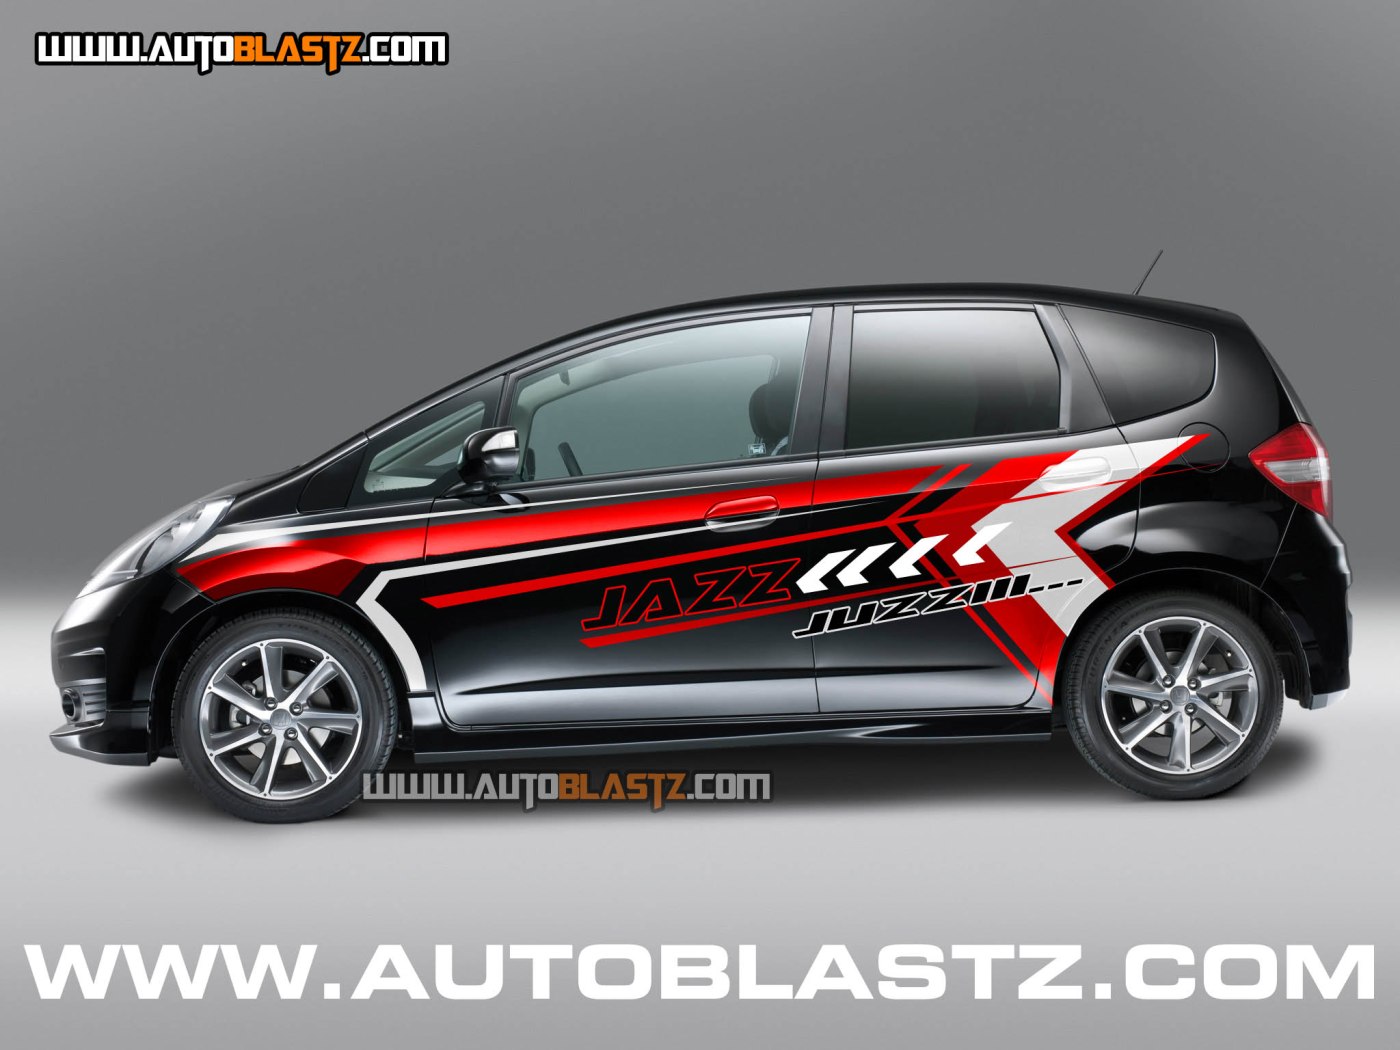 CAR SERIES Modifikasi Honda Jazz Black Stiker Desain Sporty Jazz